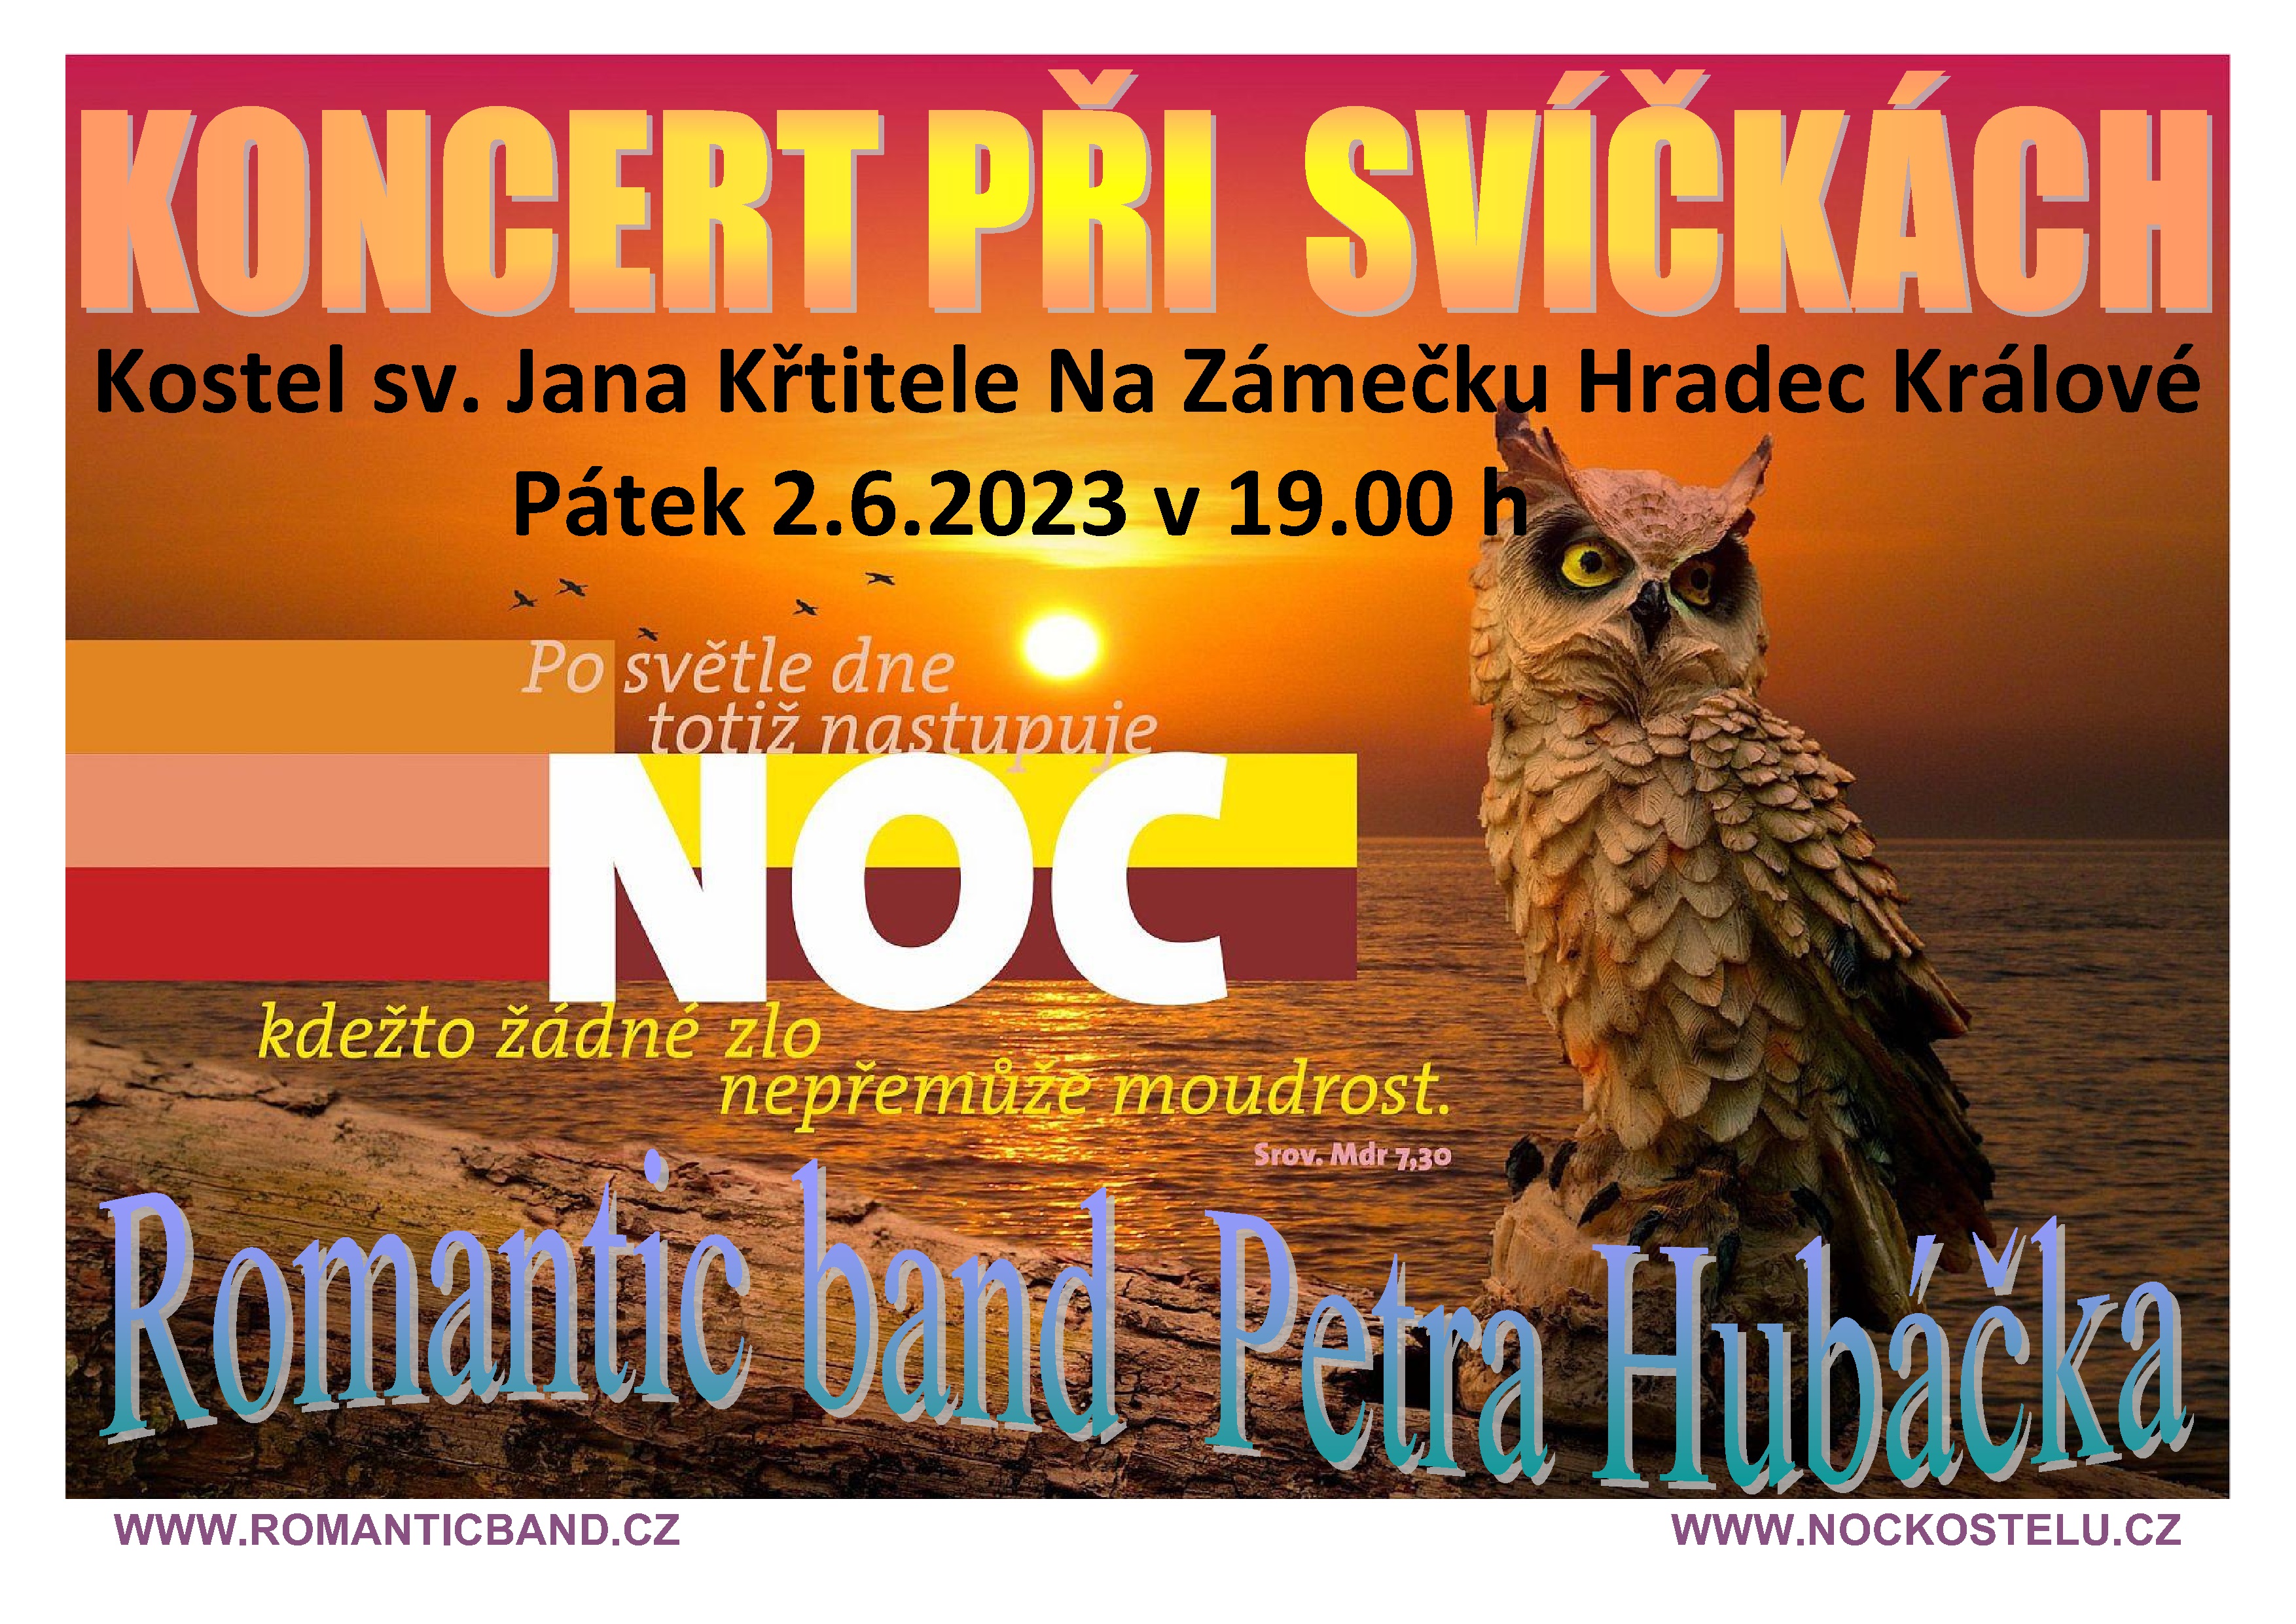 Romantic band Petra Hubáčka